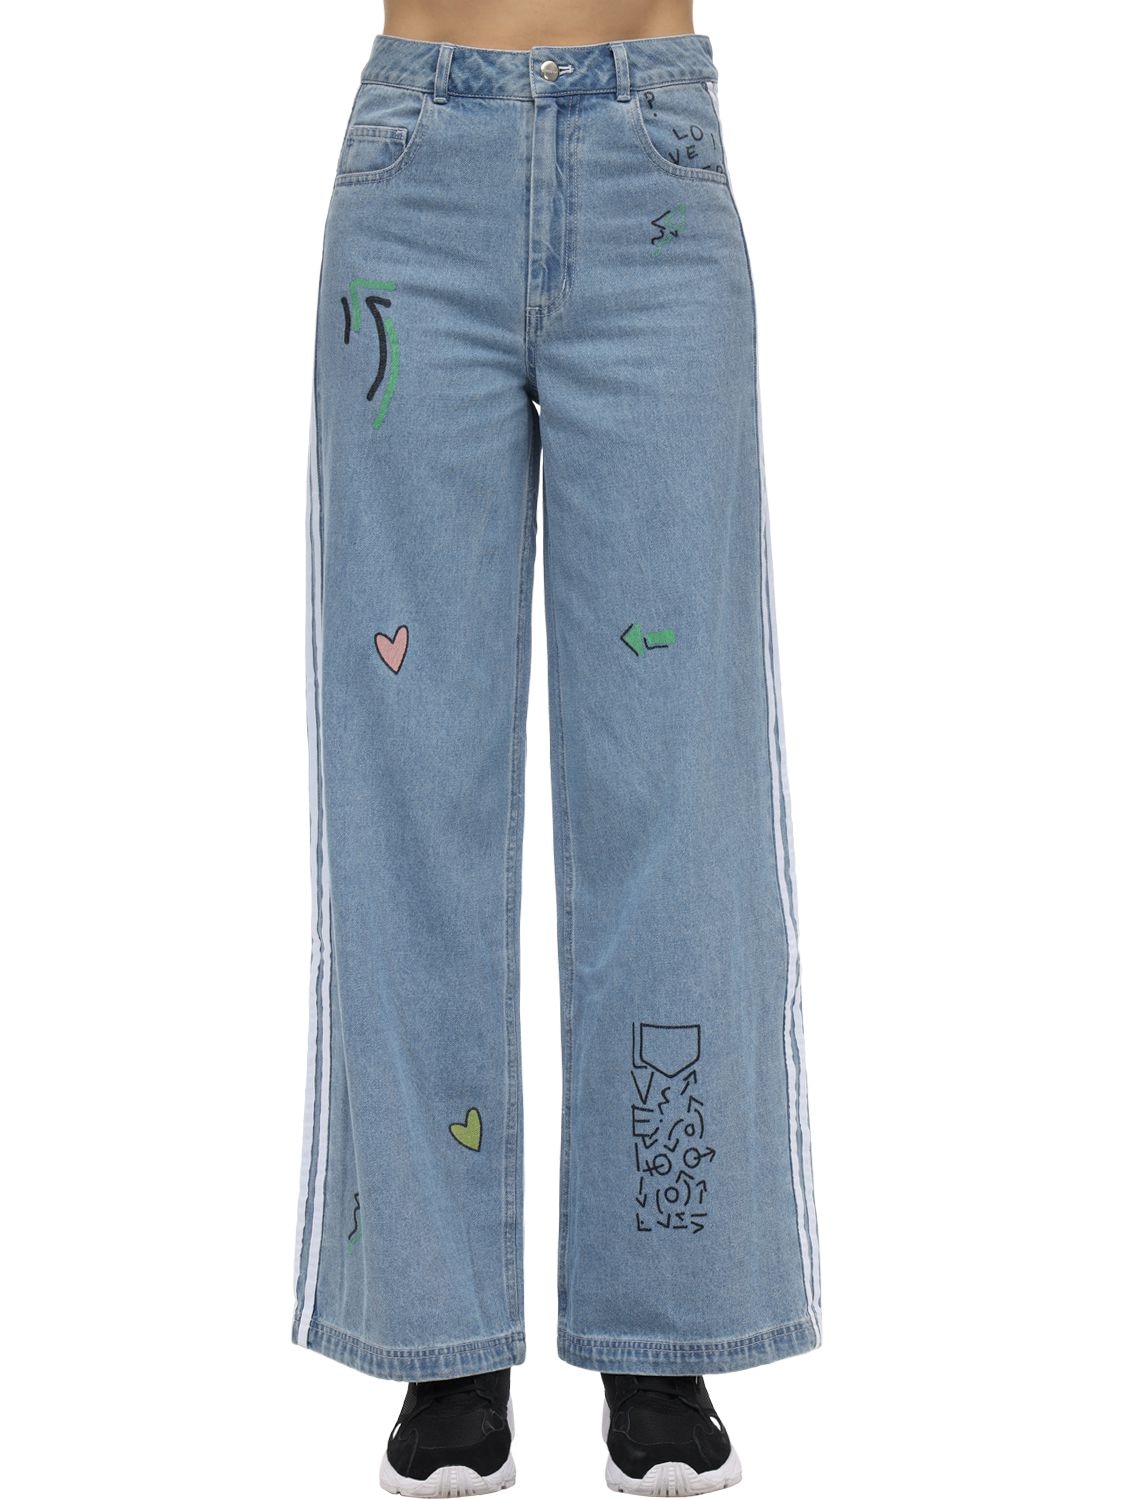 adidas originals jeans pants